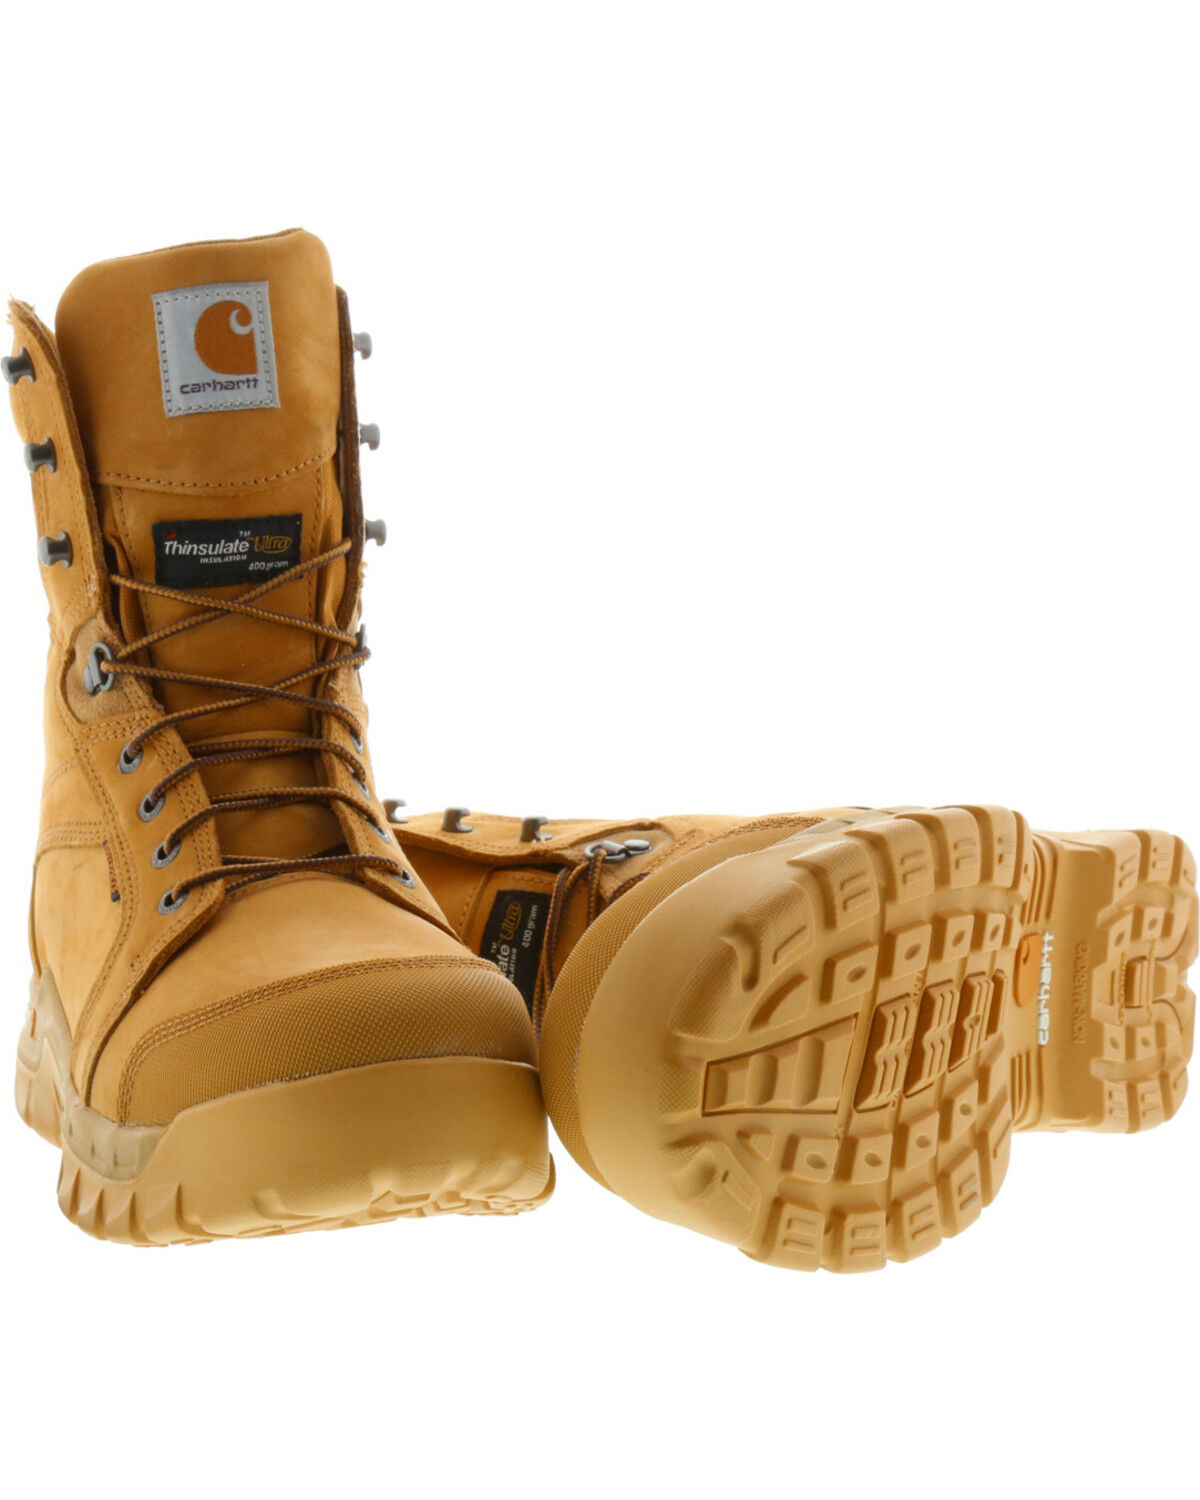 carhartt boots insulated